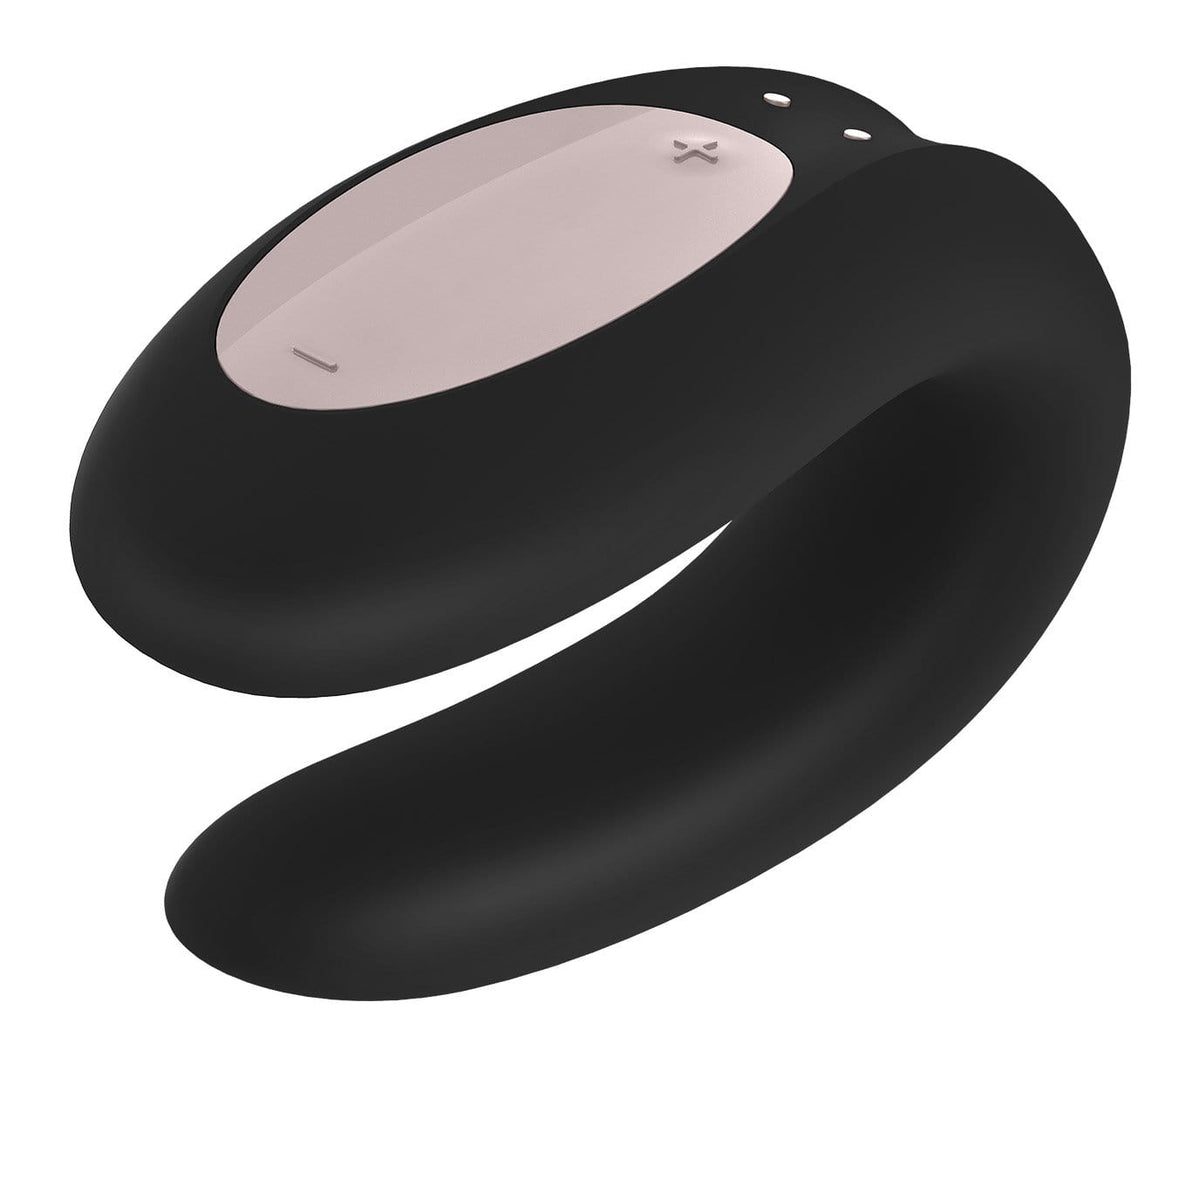 Satisfyer - Double Joy App-Controlled Partner Vibrator (Black) STF1124 CherryAffairs